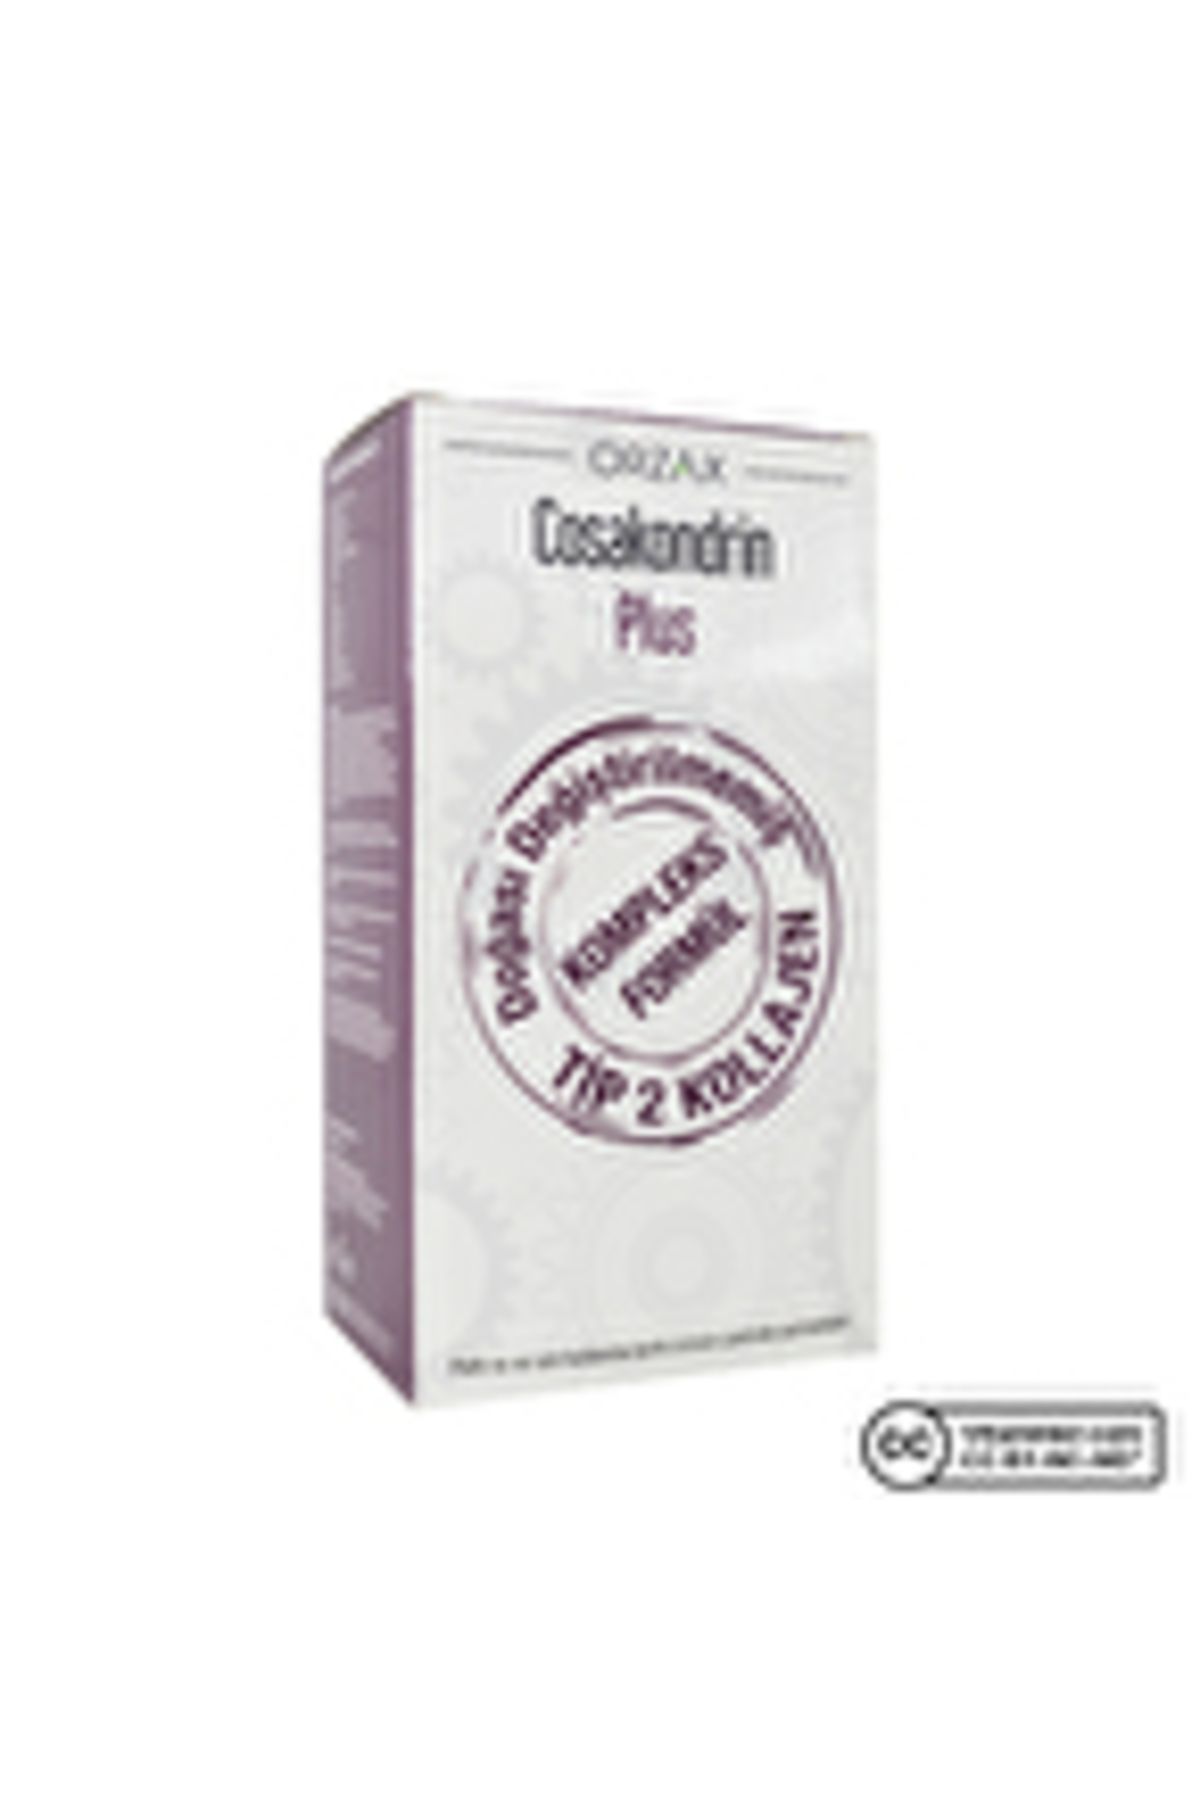 Cosakondrin Plus 60 Tablet + Cosakondrin Jel 100 mL Hediyeli ( 1 ADET )